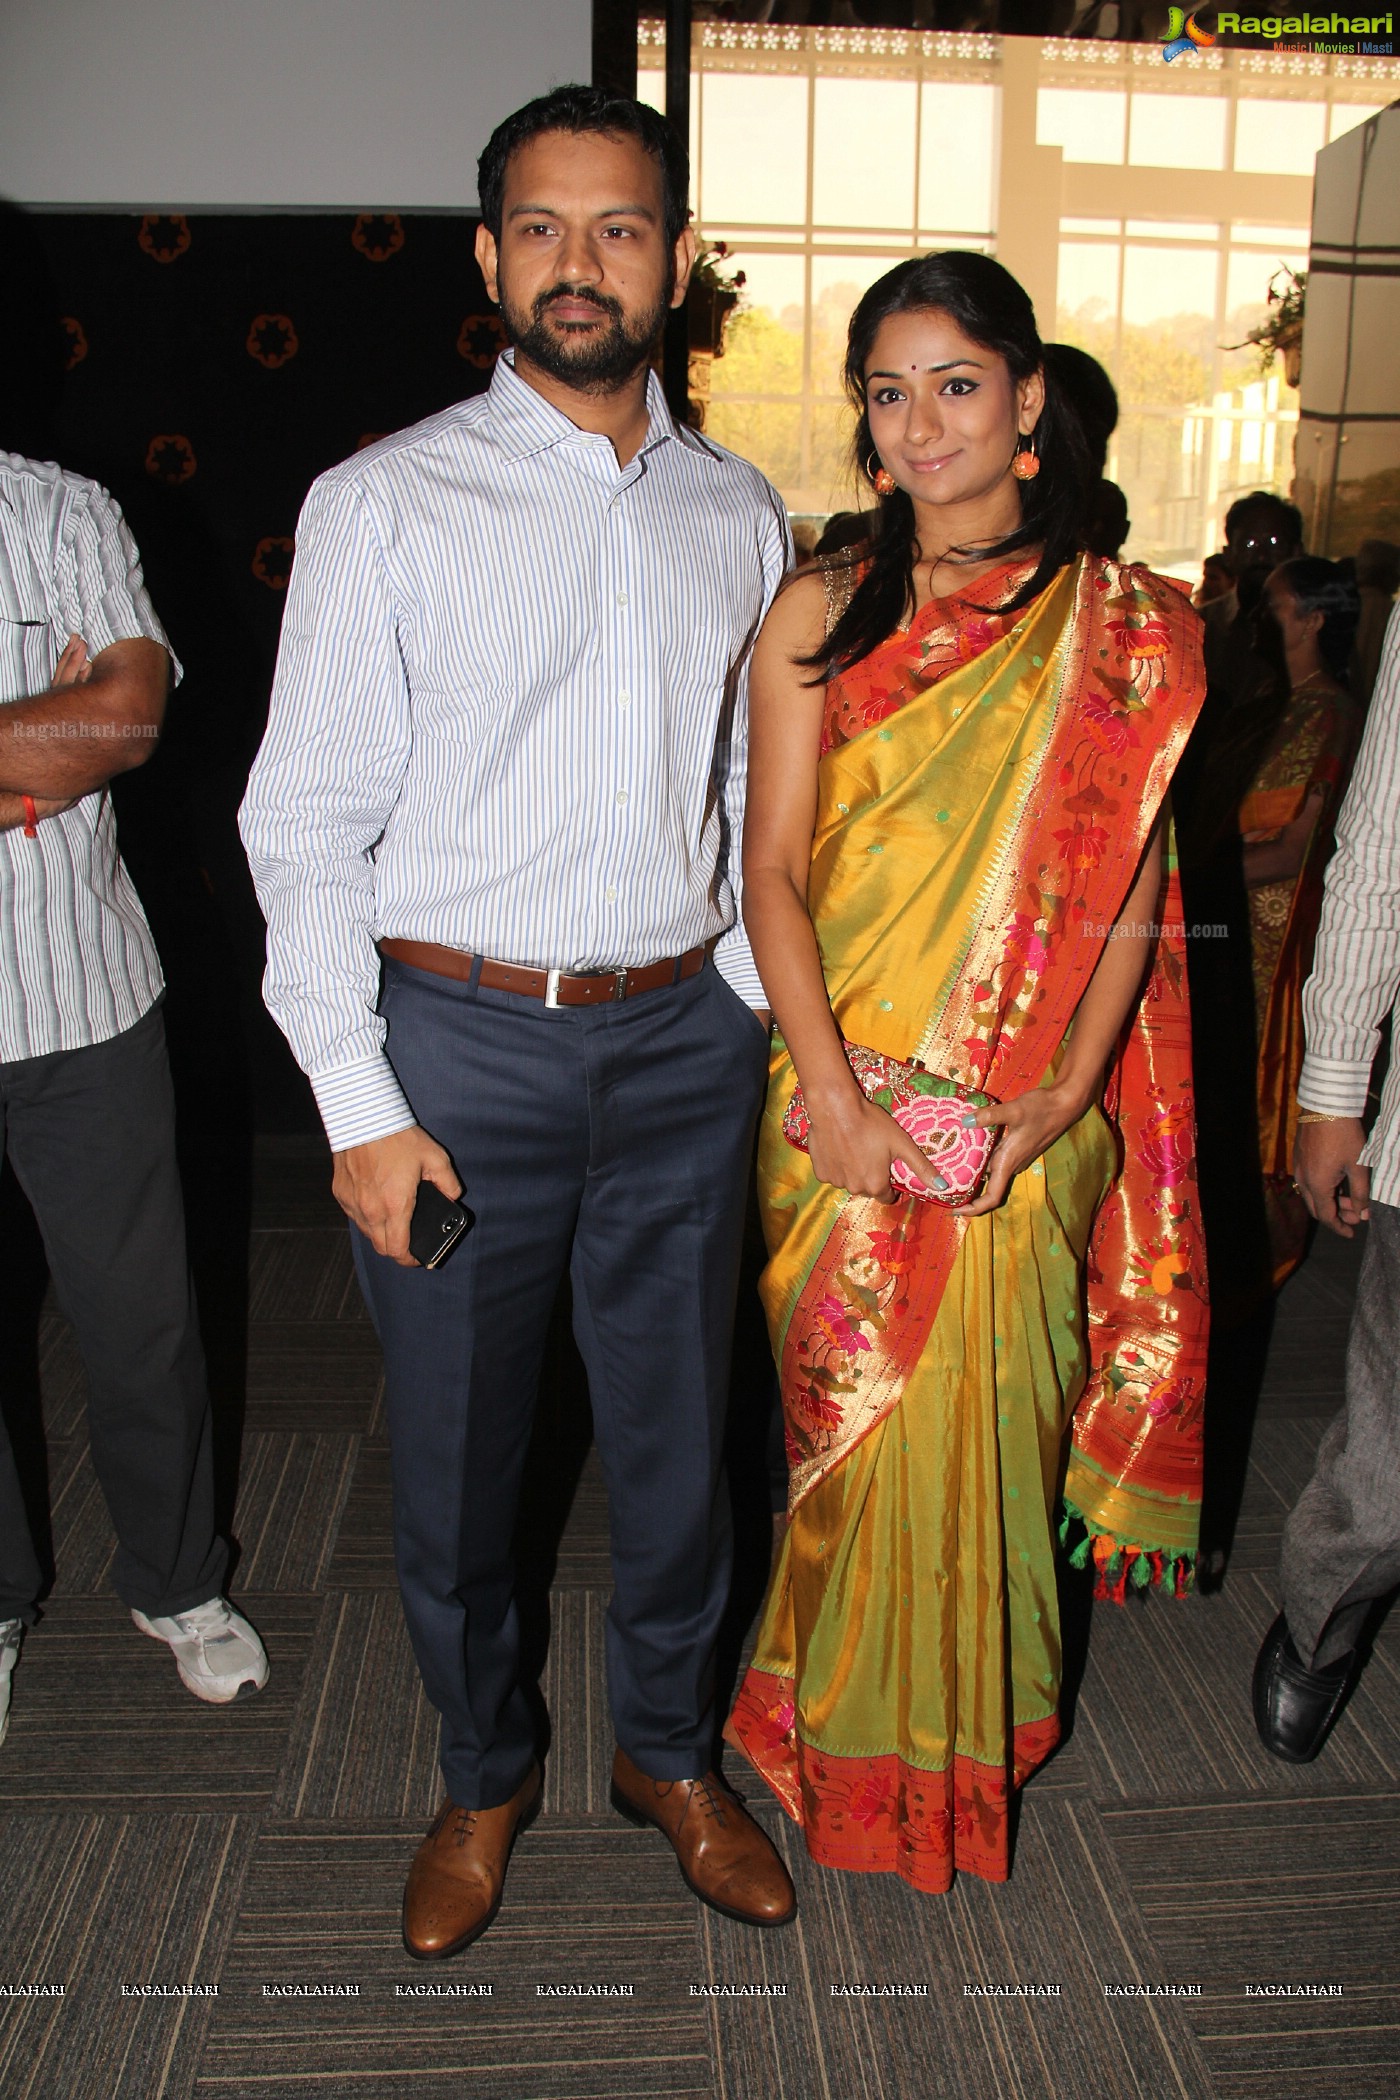 Suguna-Ramu Wedding Celebrations at JRC Conventions & Trade Fairs, Hyderabad